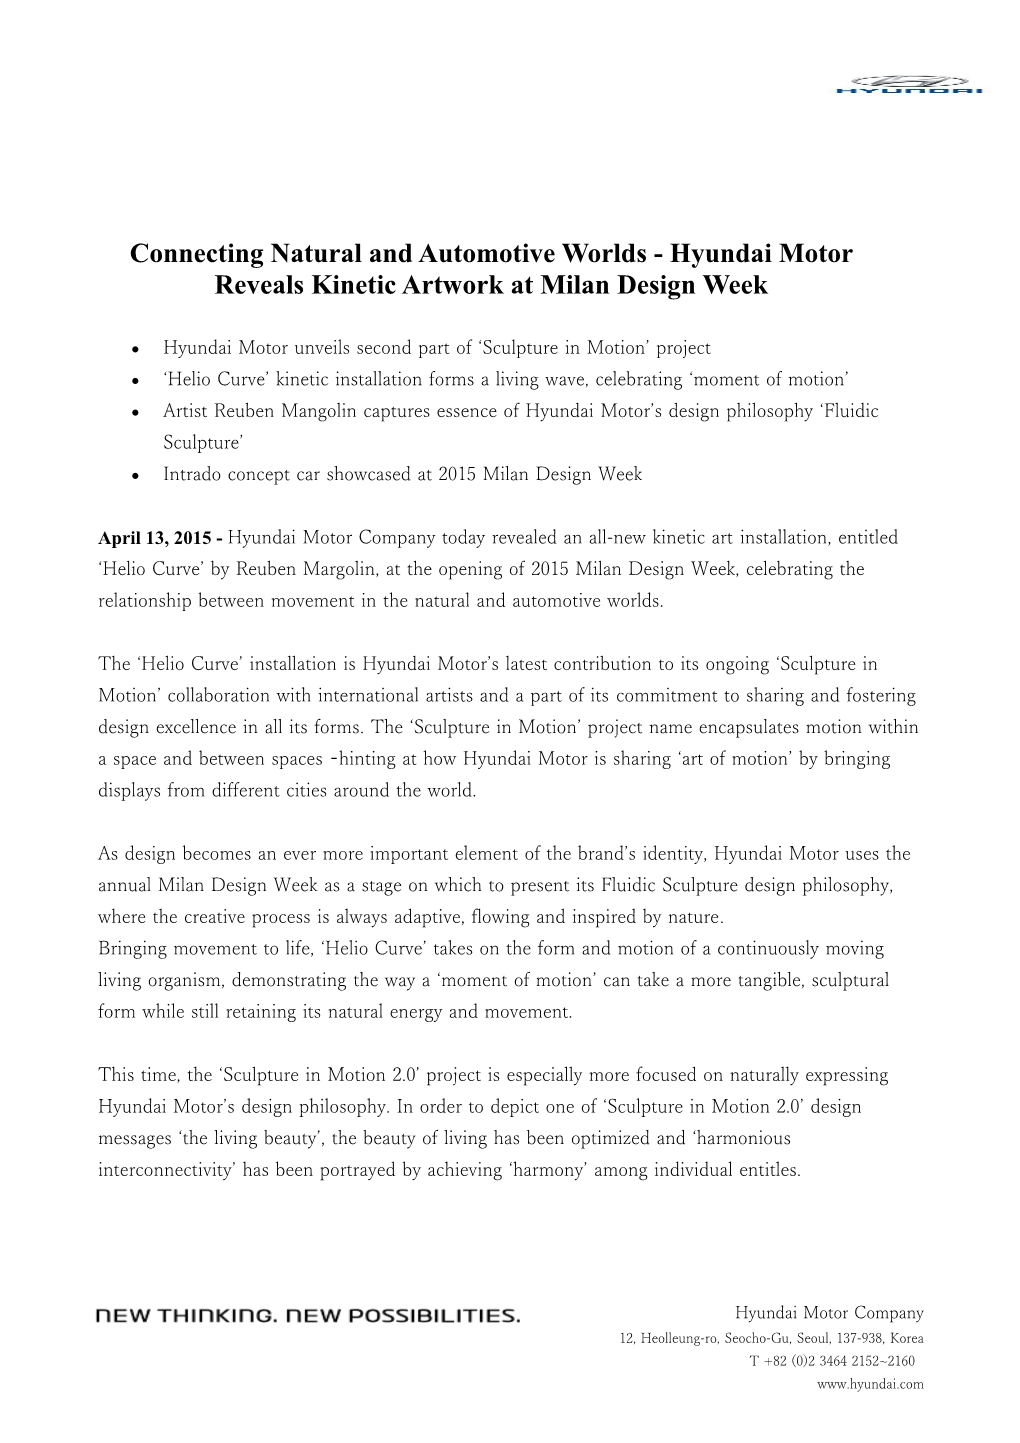 Connecting Natural and Automotive Worlds - Hyundai Motor Reveals Kineticartwork at Milan